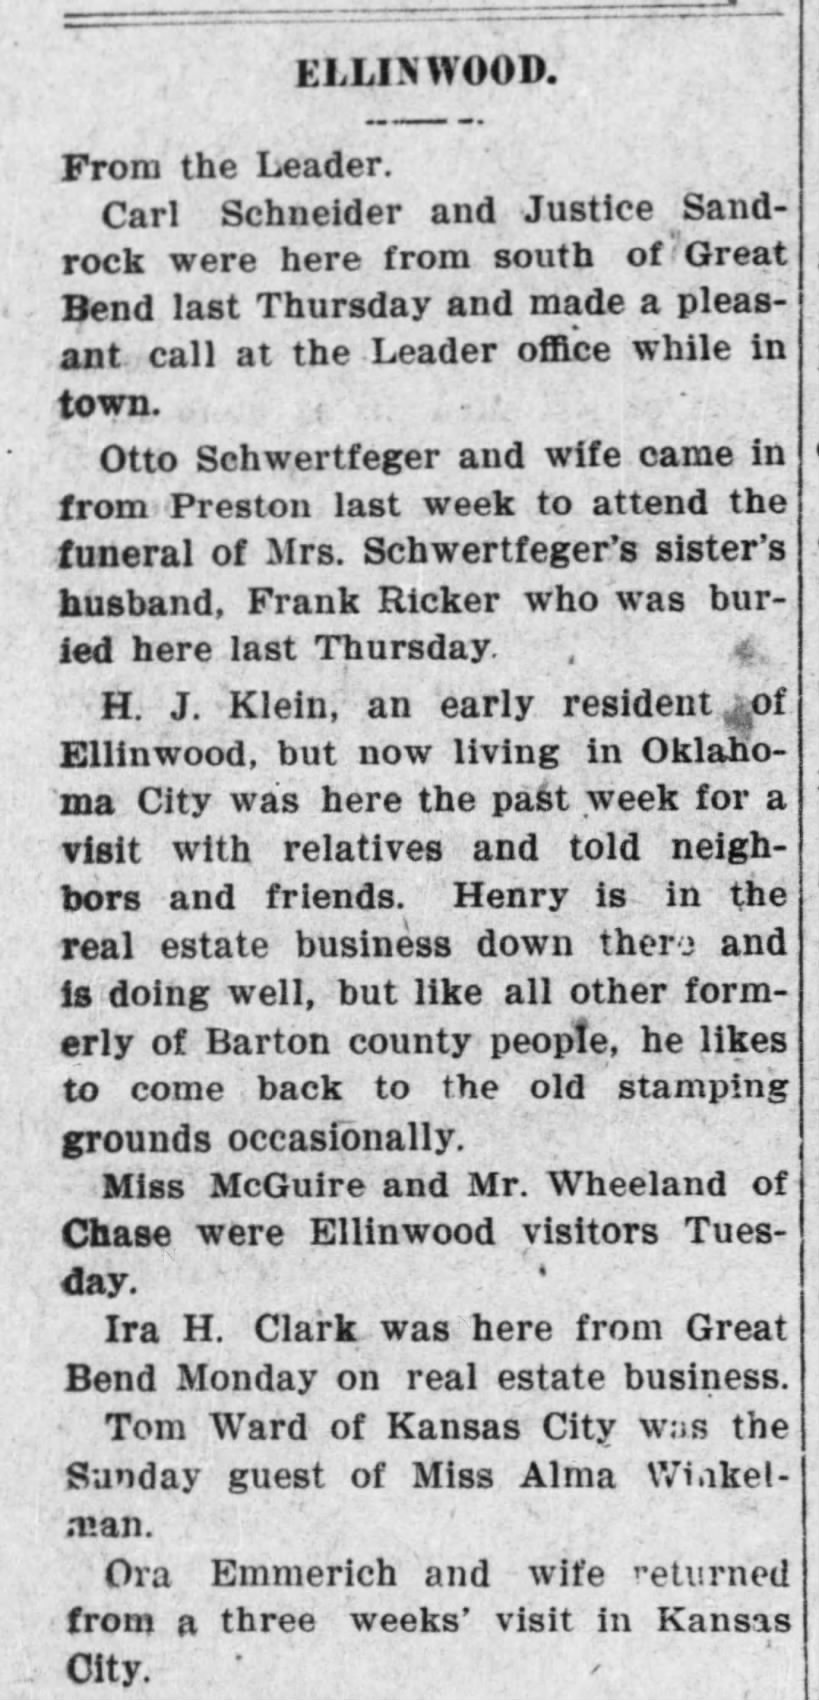 Knop, Maria - social - Great Bend Tribune - 23 Jan 1911, Mon - pg 2